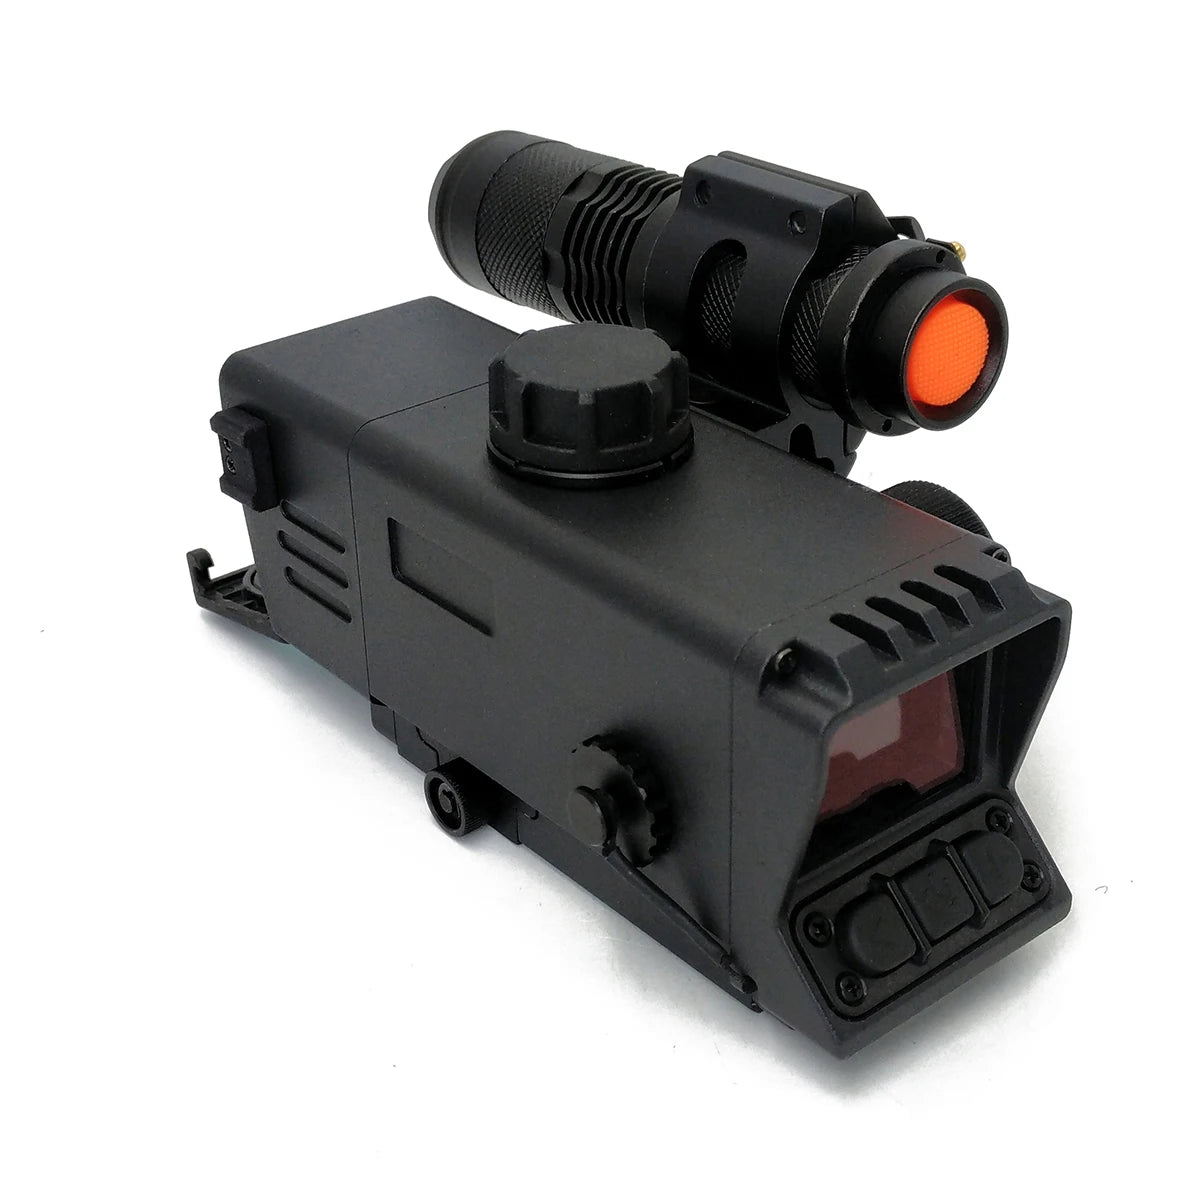 TONTUBE Infrared Night Vision TRD10Pro Red Dot Laser Optical Sight